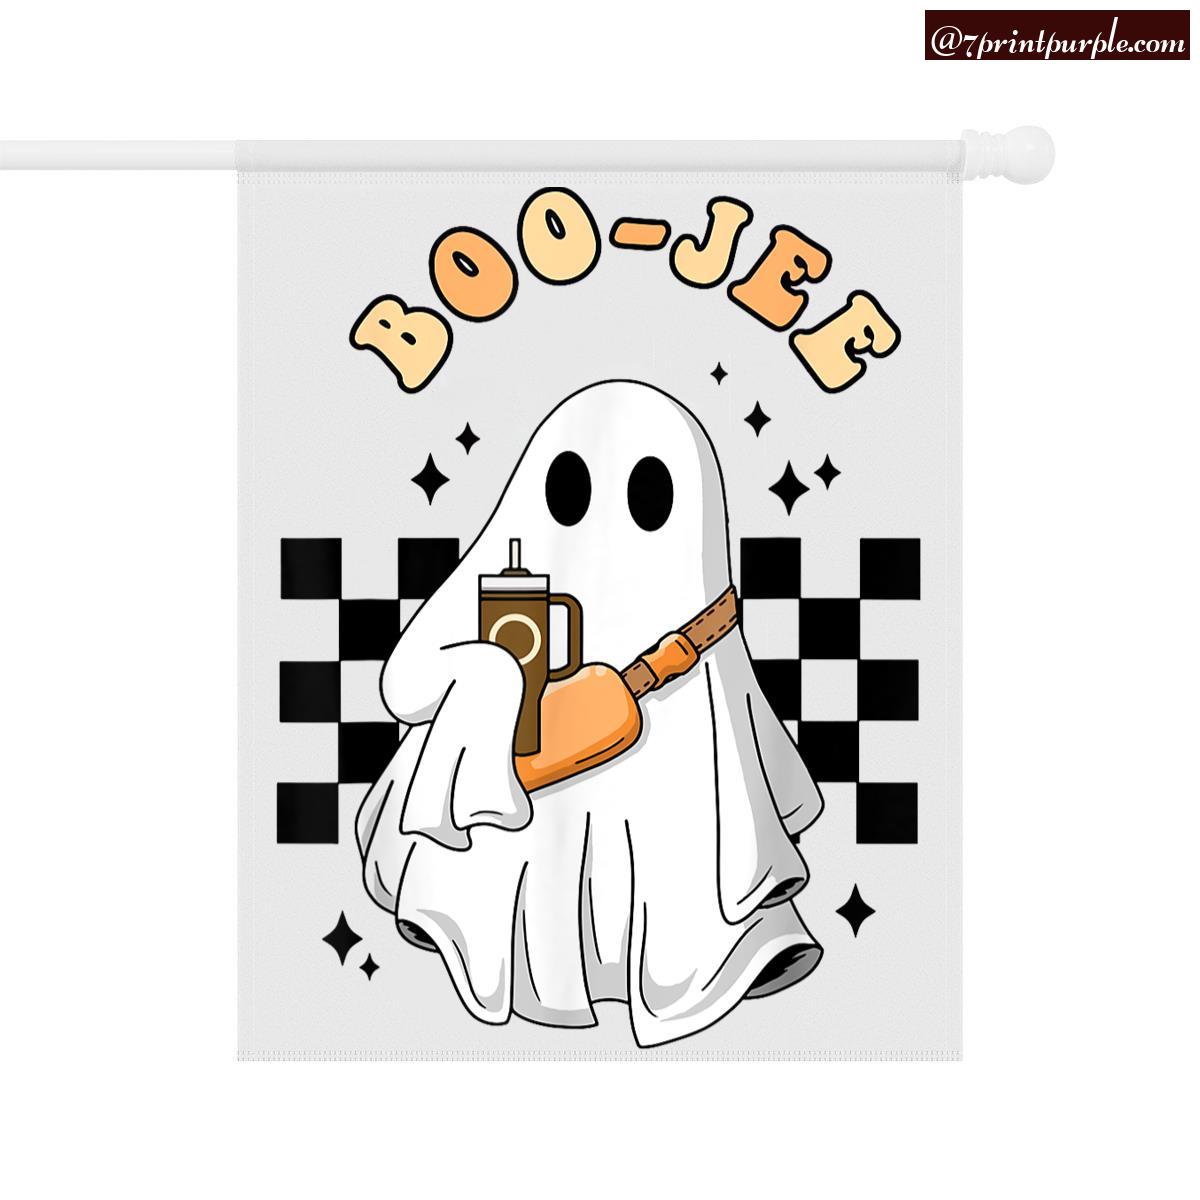 https://cdn.7printpurple.com/uploads/2209/Cute-Boujee-Boo-Jee-Stanley-Tumbler-Inspired-Ghost-Halloween-2.jpg